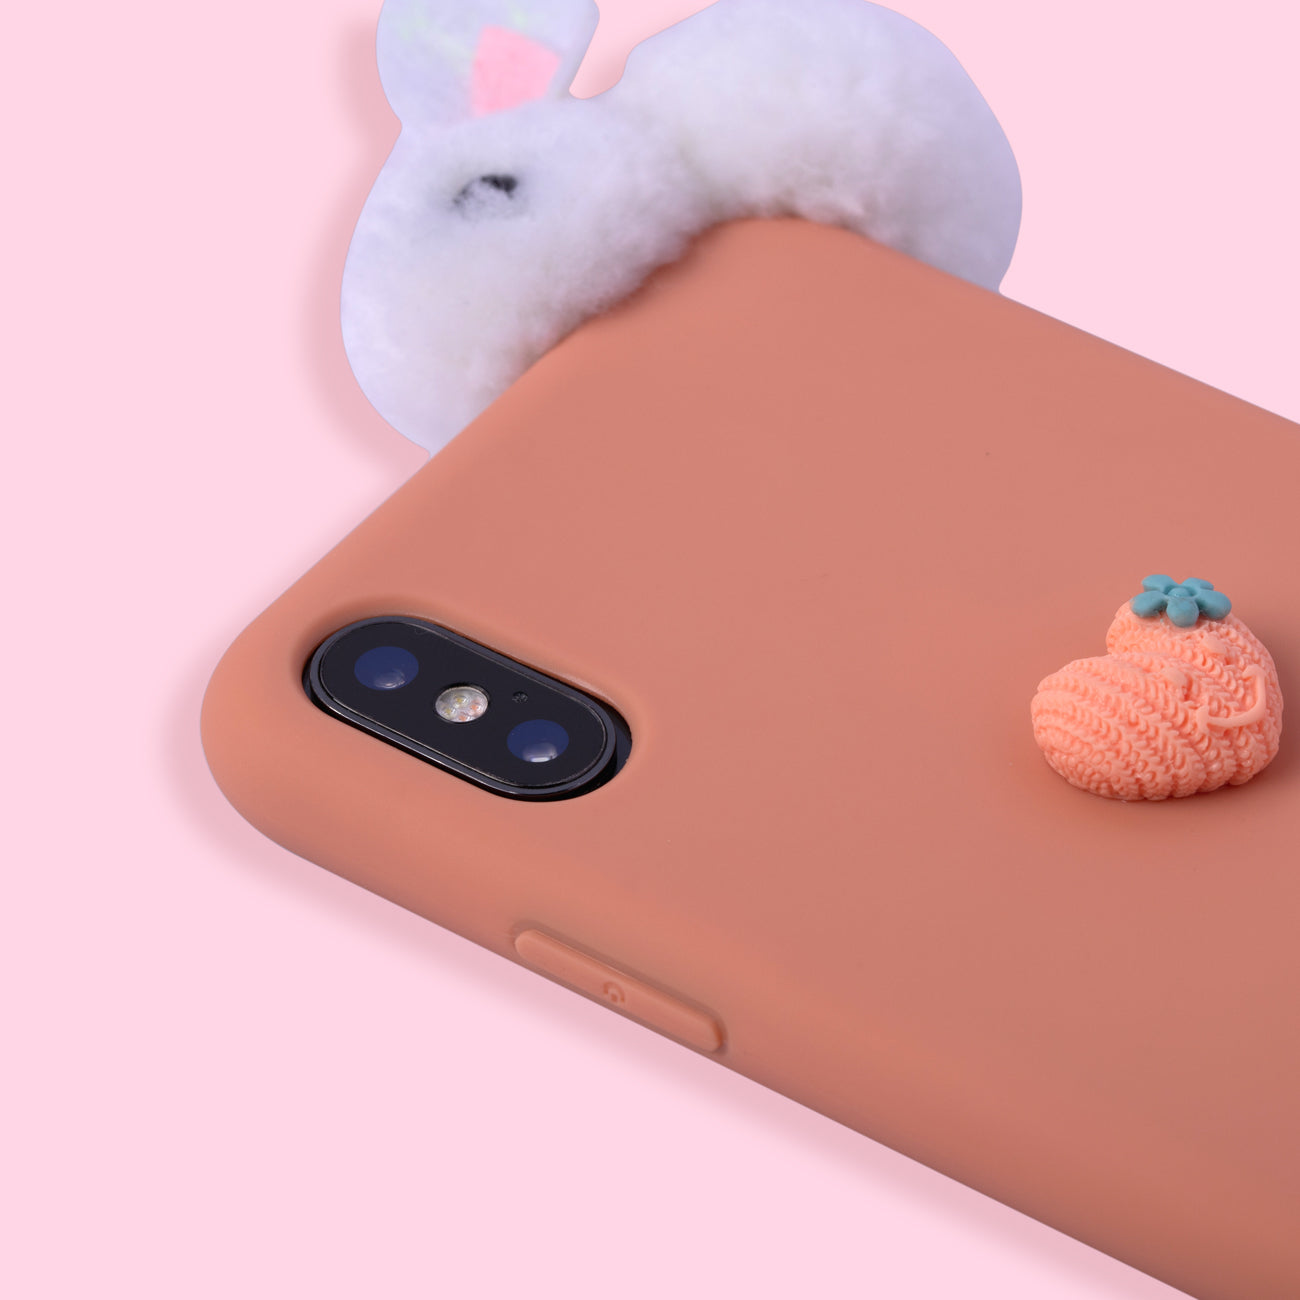 iPhone X/XS Case - Rabbit - Orange